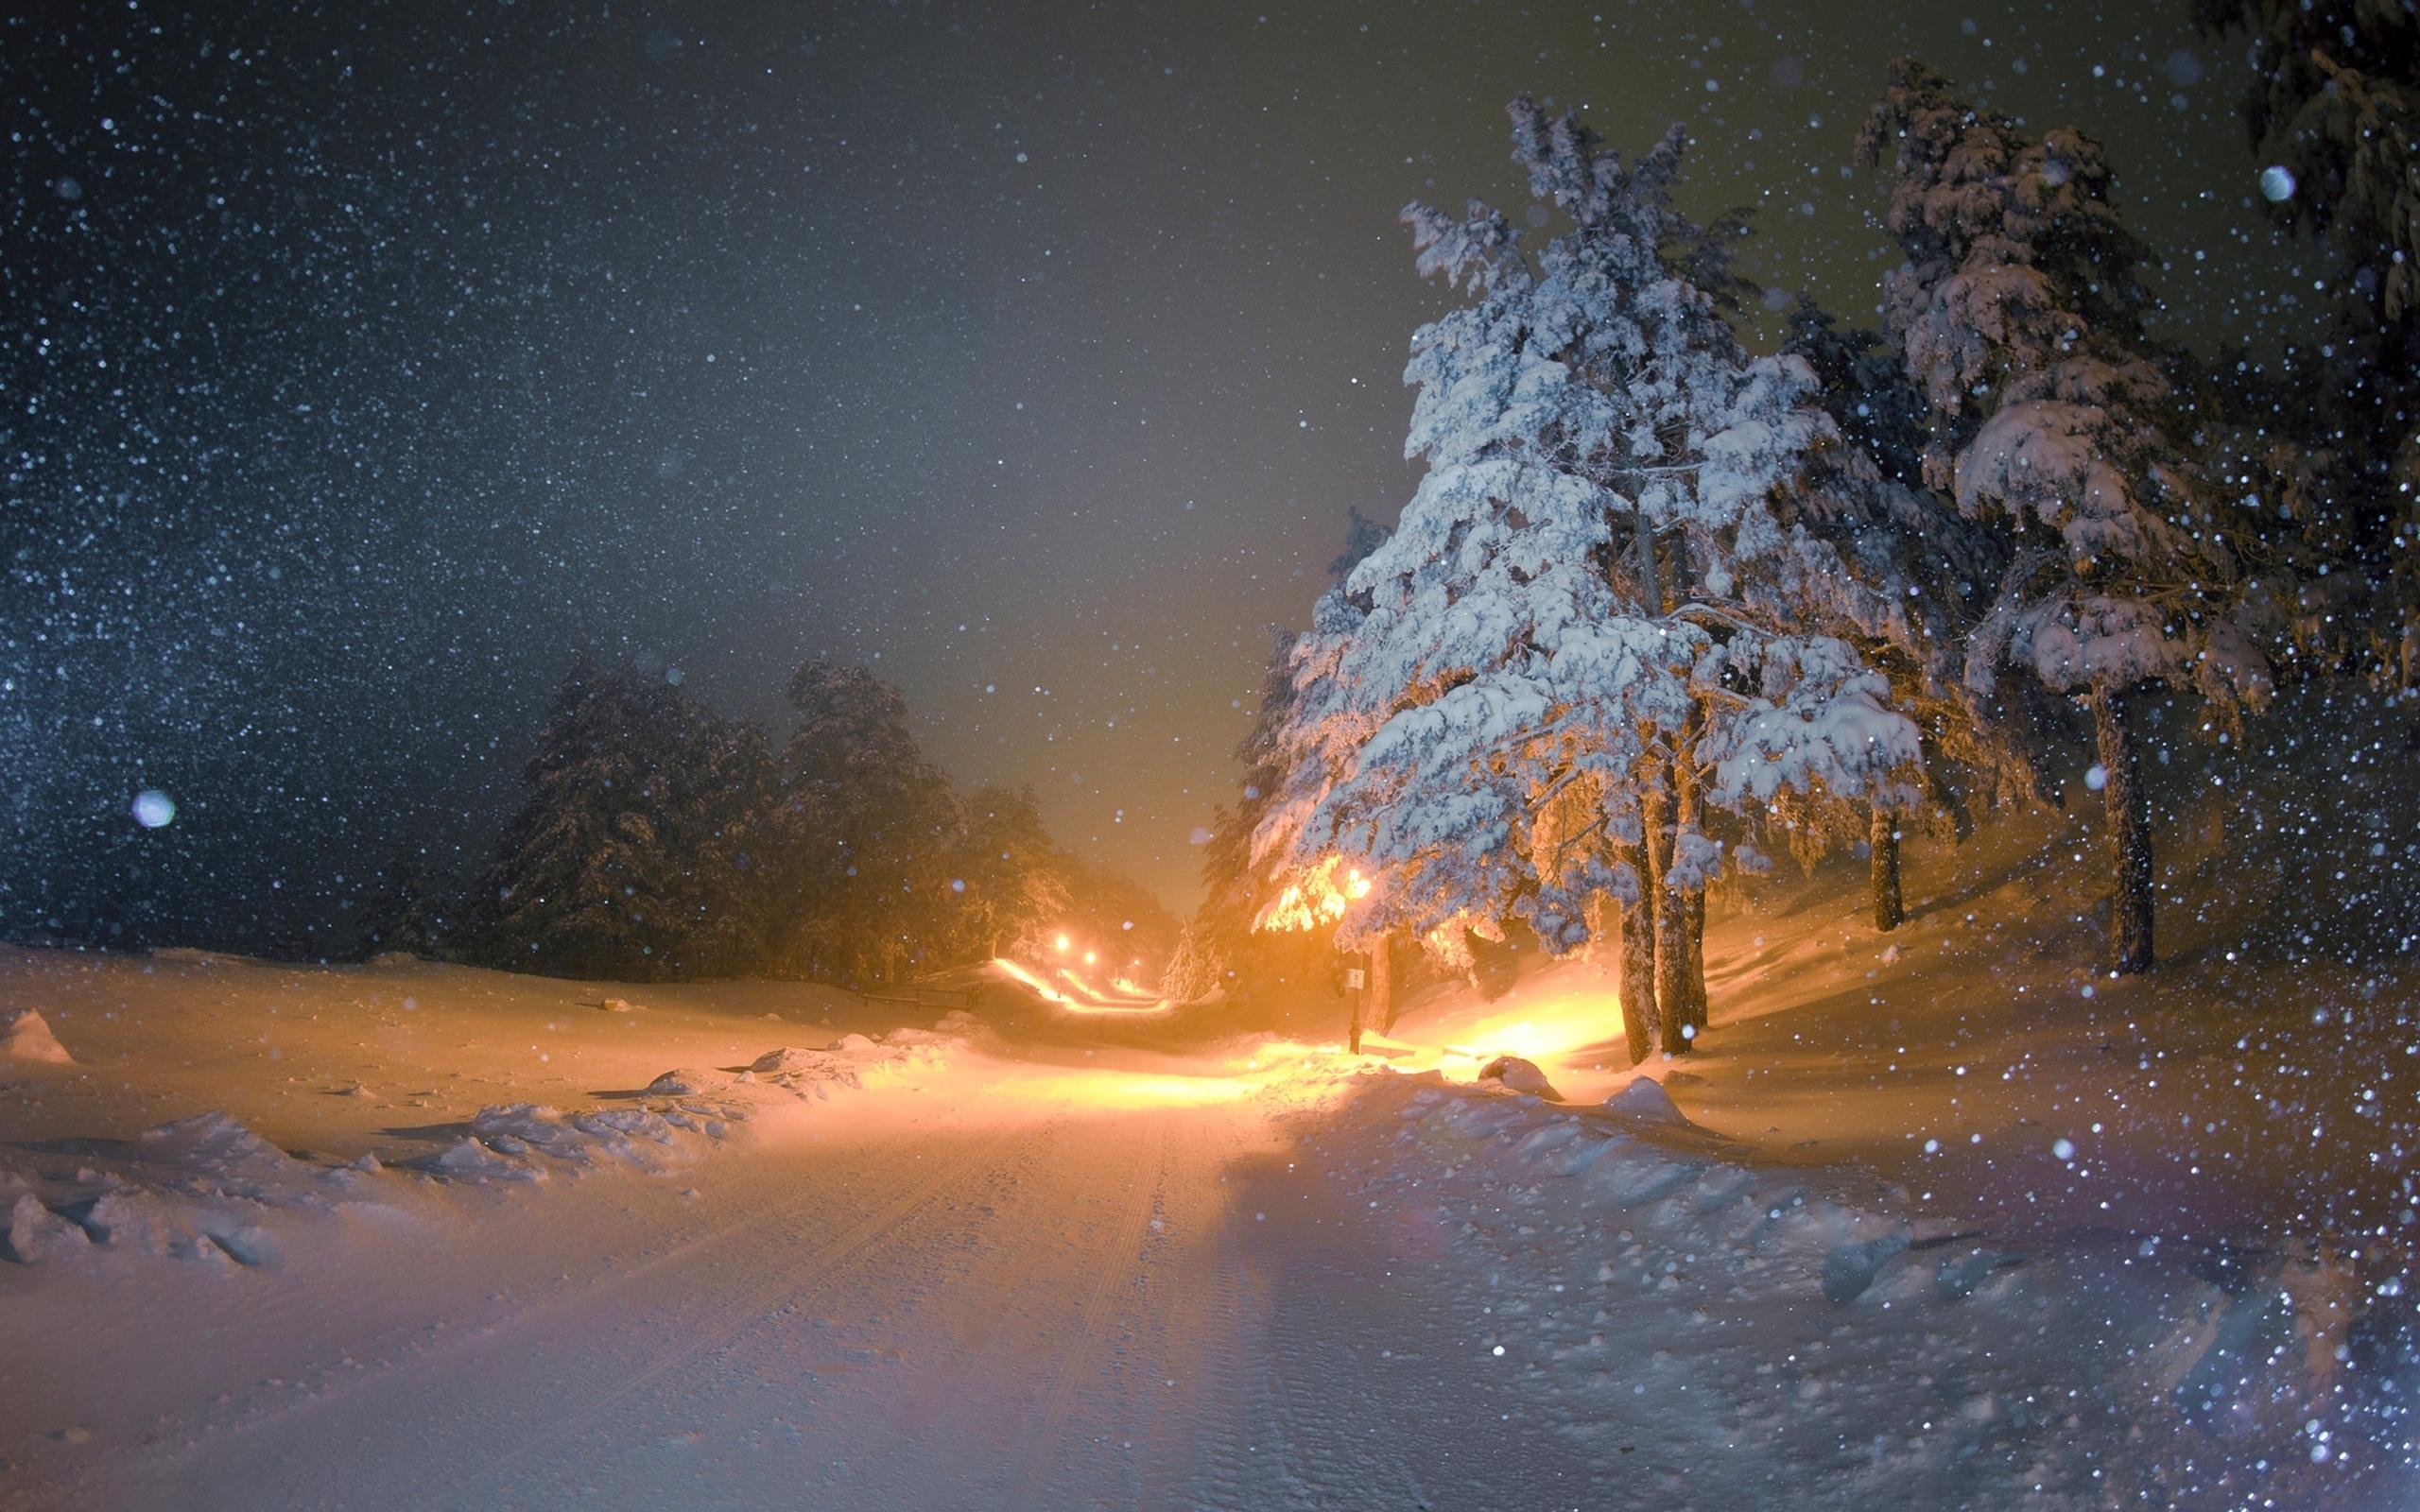 Картинки пейзаж, лес, деревня, россия, деревья, сибирь, зима, снег, домики,  сугробы, ночь - обои 1920x1080, картинка №268158